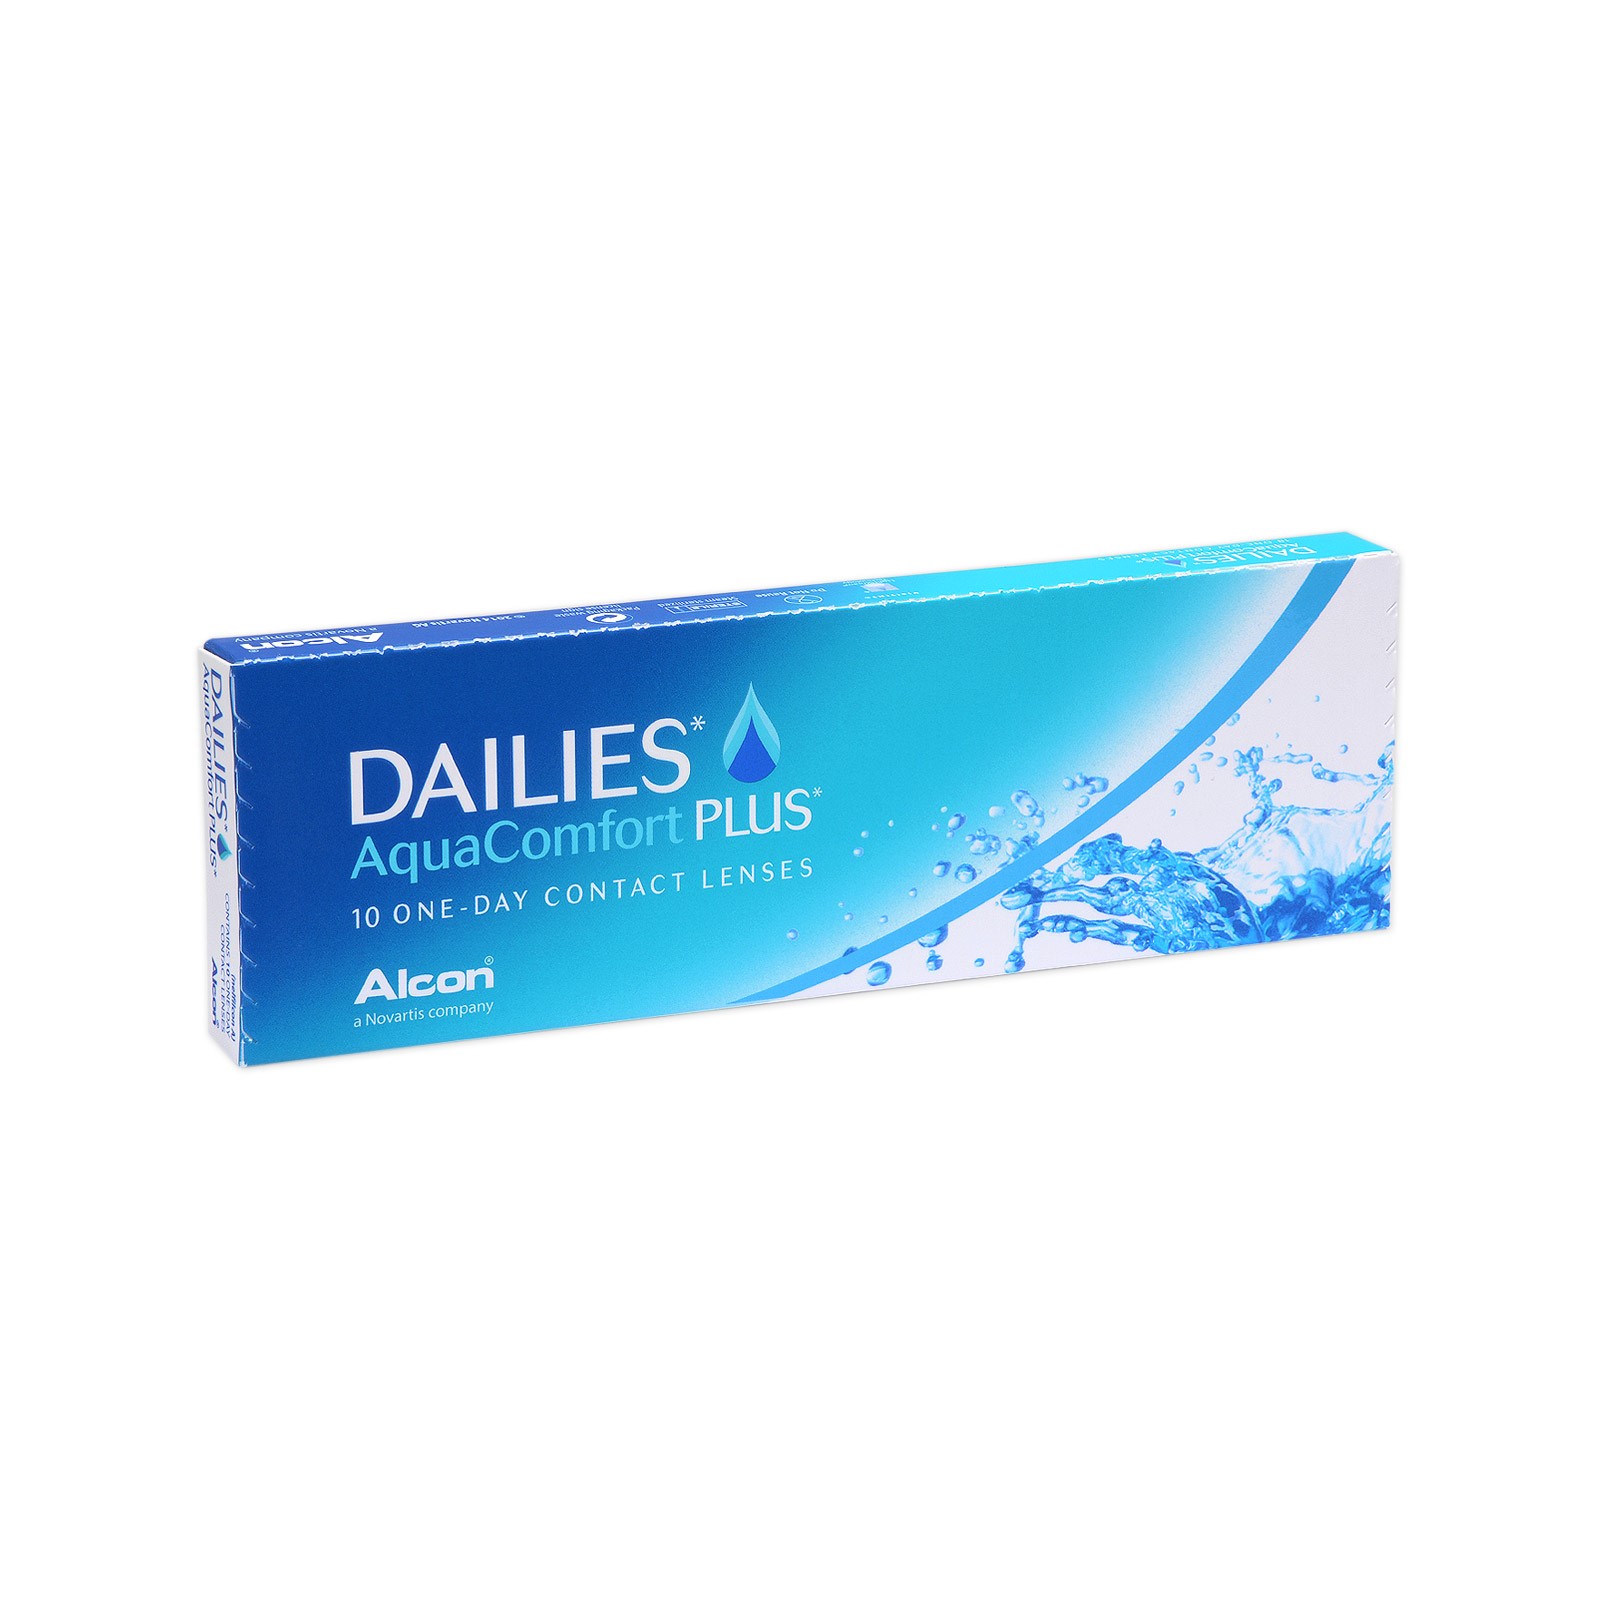 dailies-aquacomfort-plus-dailies-alcon-kontaktlinsen-vision-contact